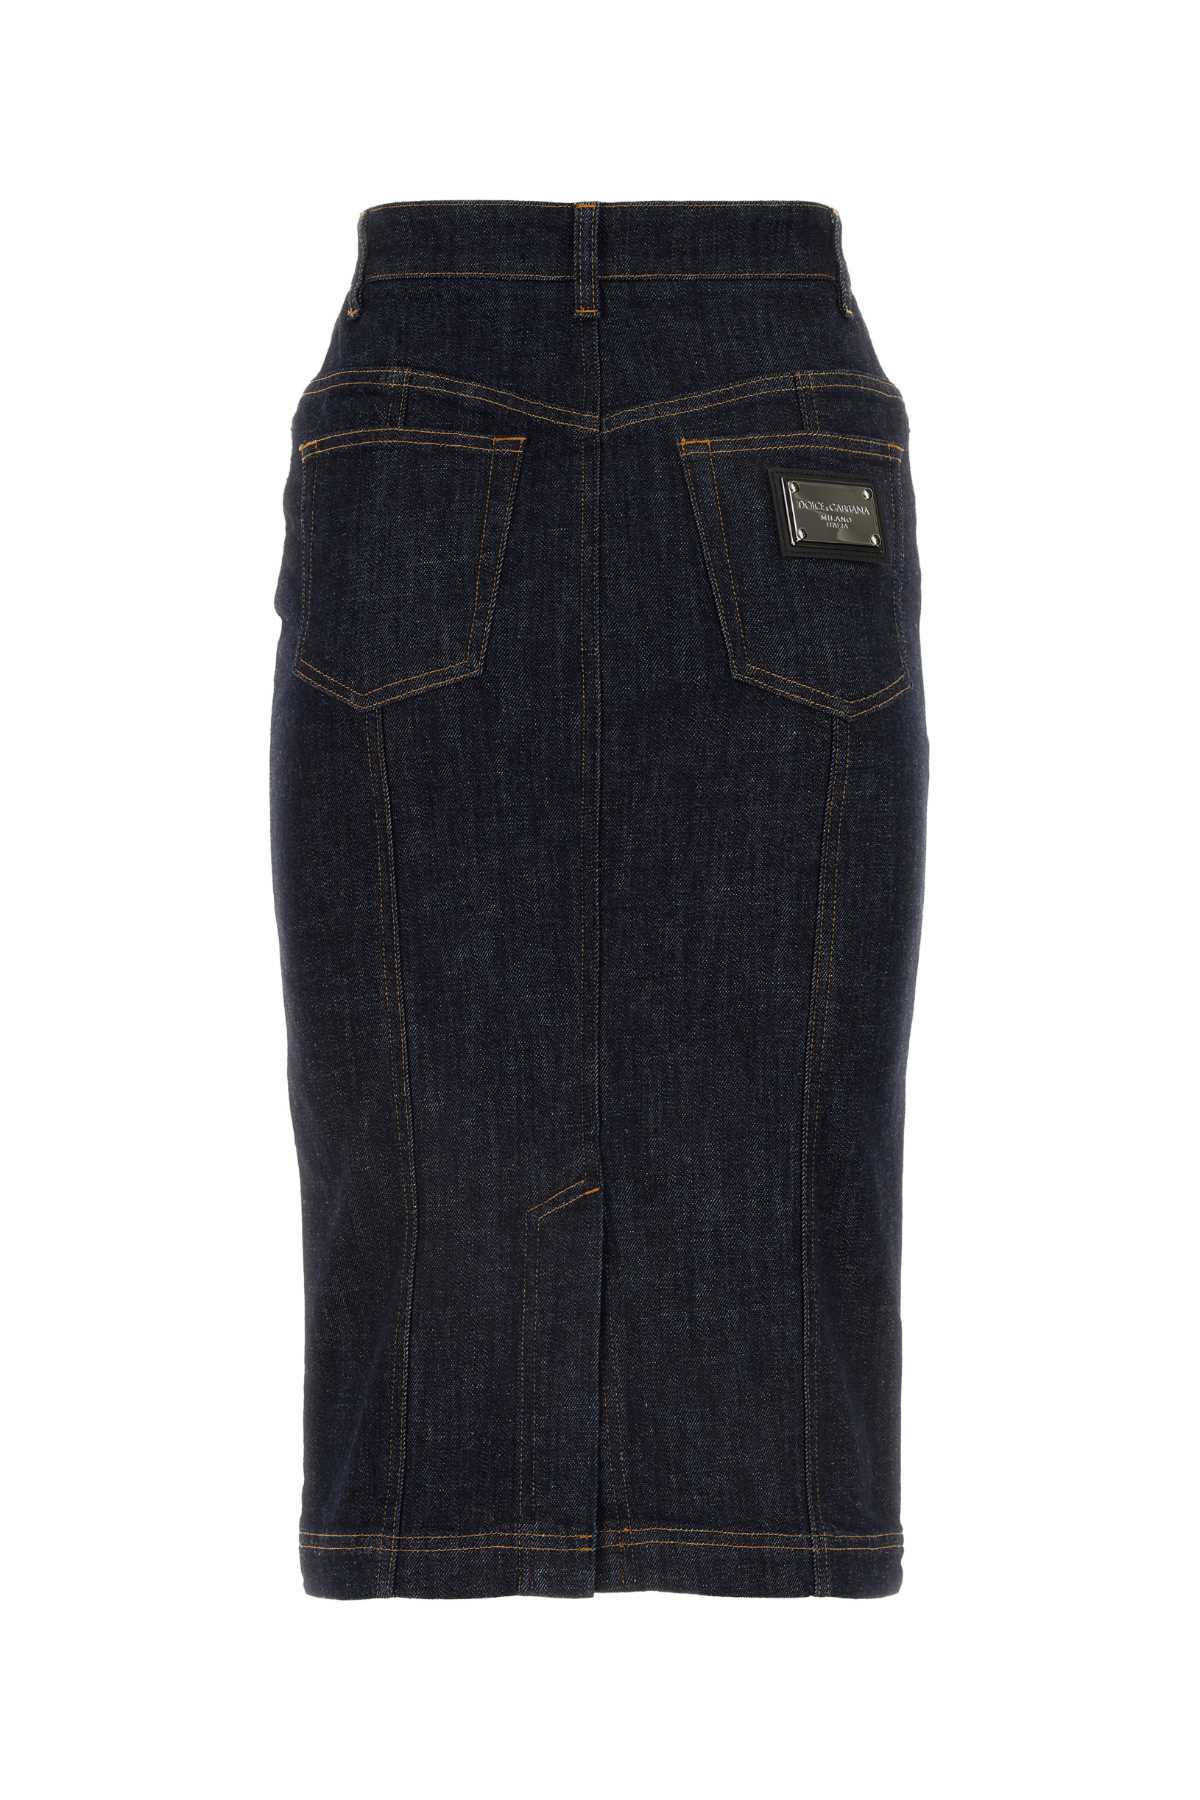 Shop Dolce & Gabbana Dark Blue Stretch Denim Skirt